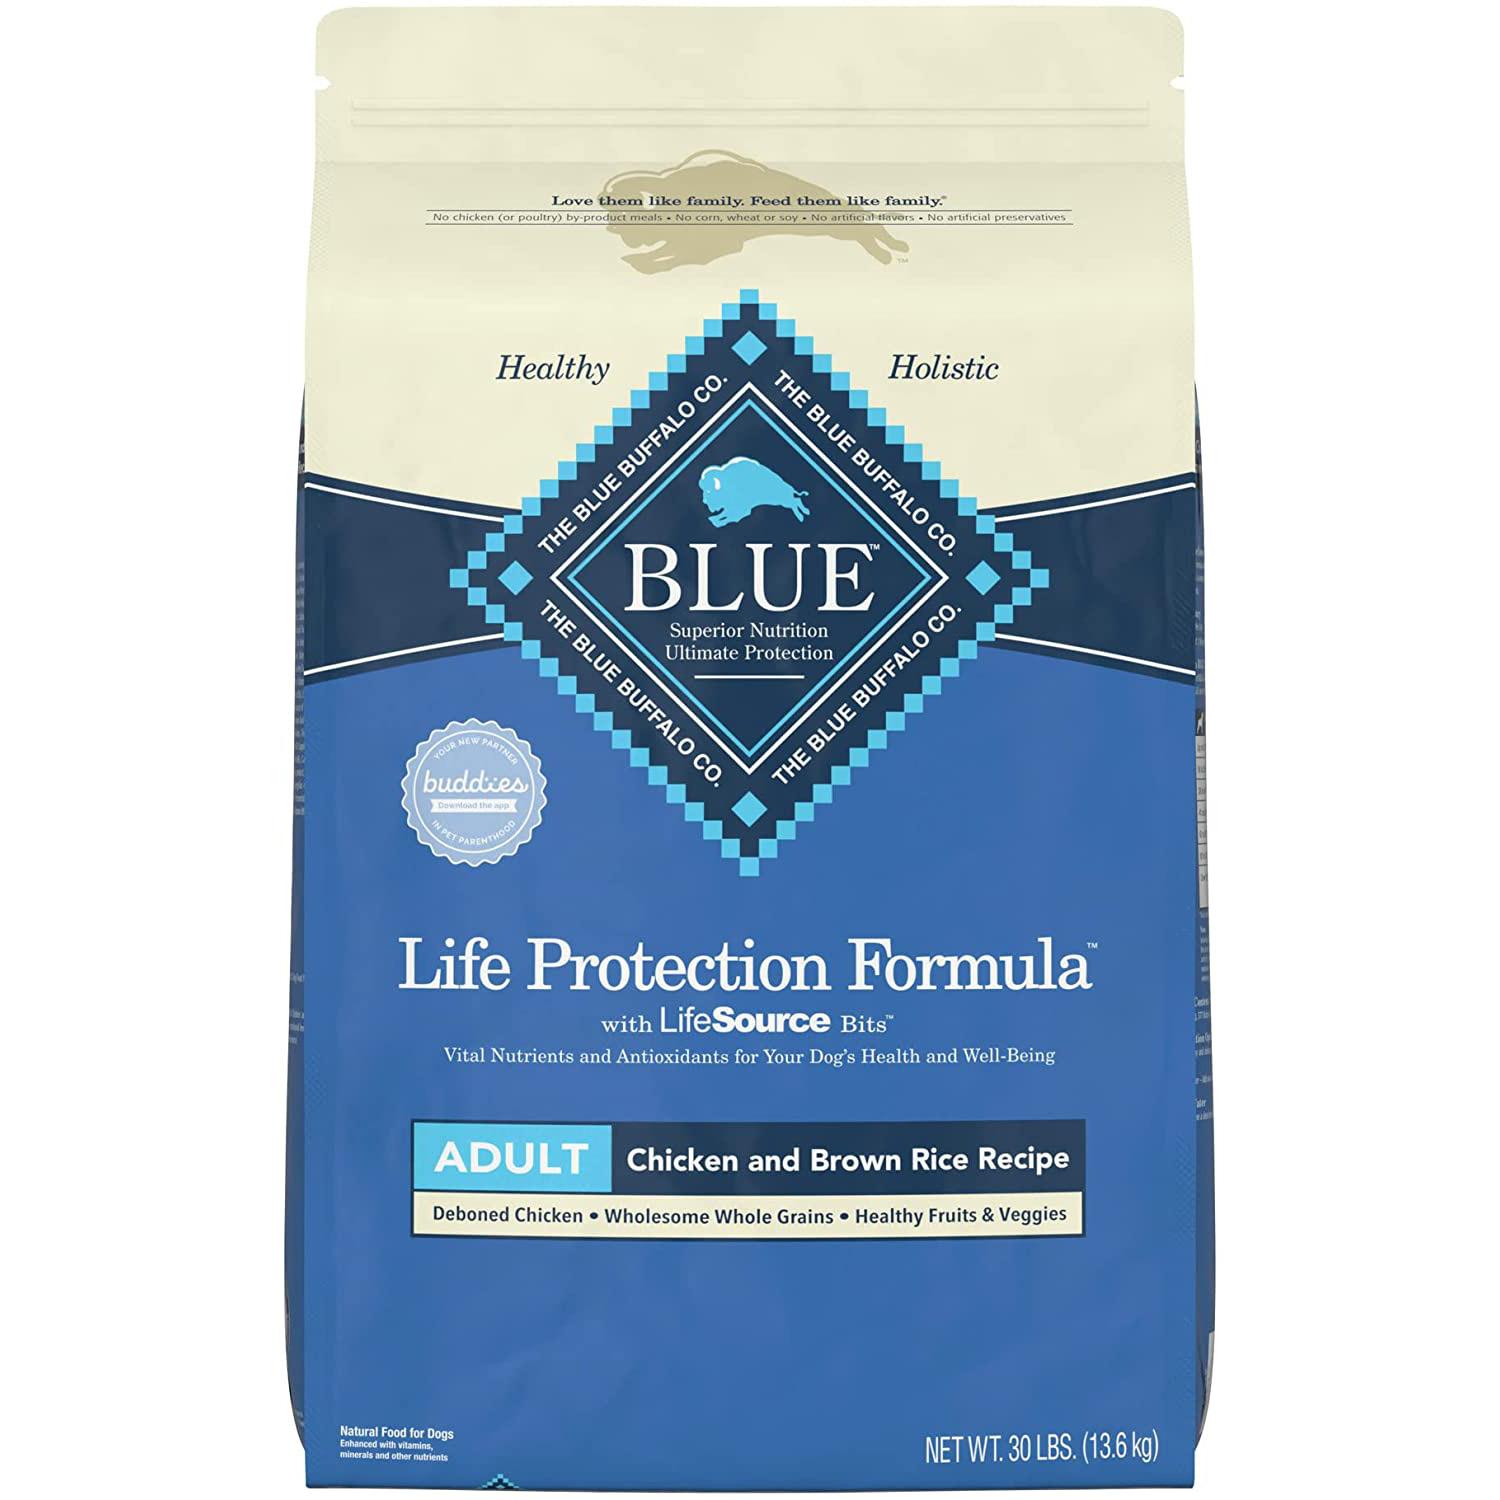 Blue Buffalo Life Protection Formula Natural Adult Dry Dog Food for $30.30 Shipped